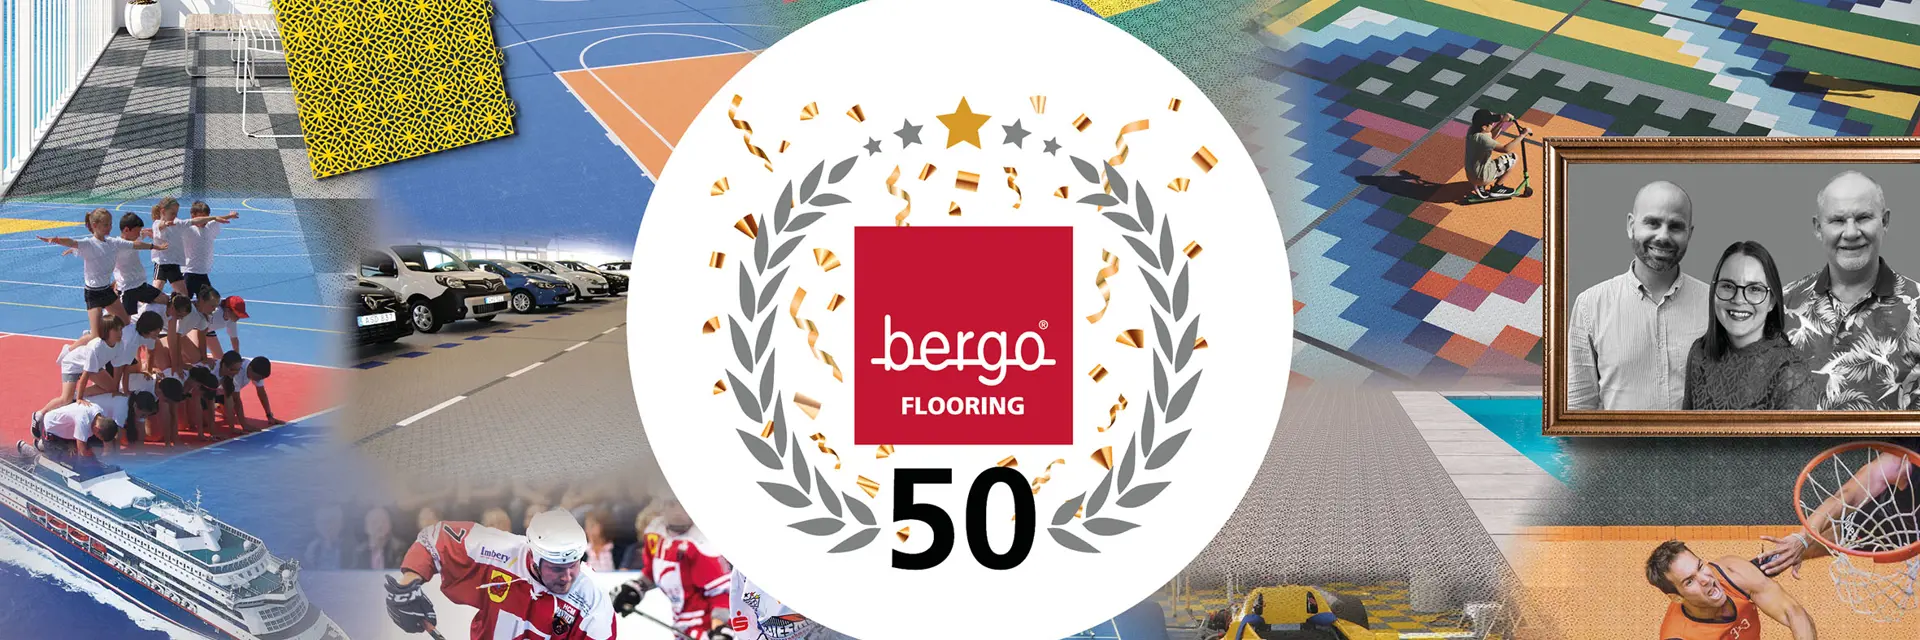 Bergo Flooring 50 Years Collage Social